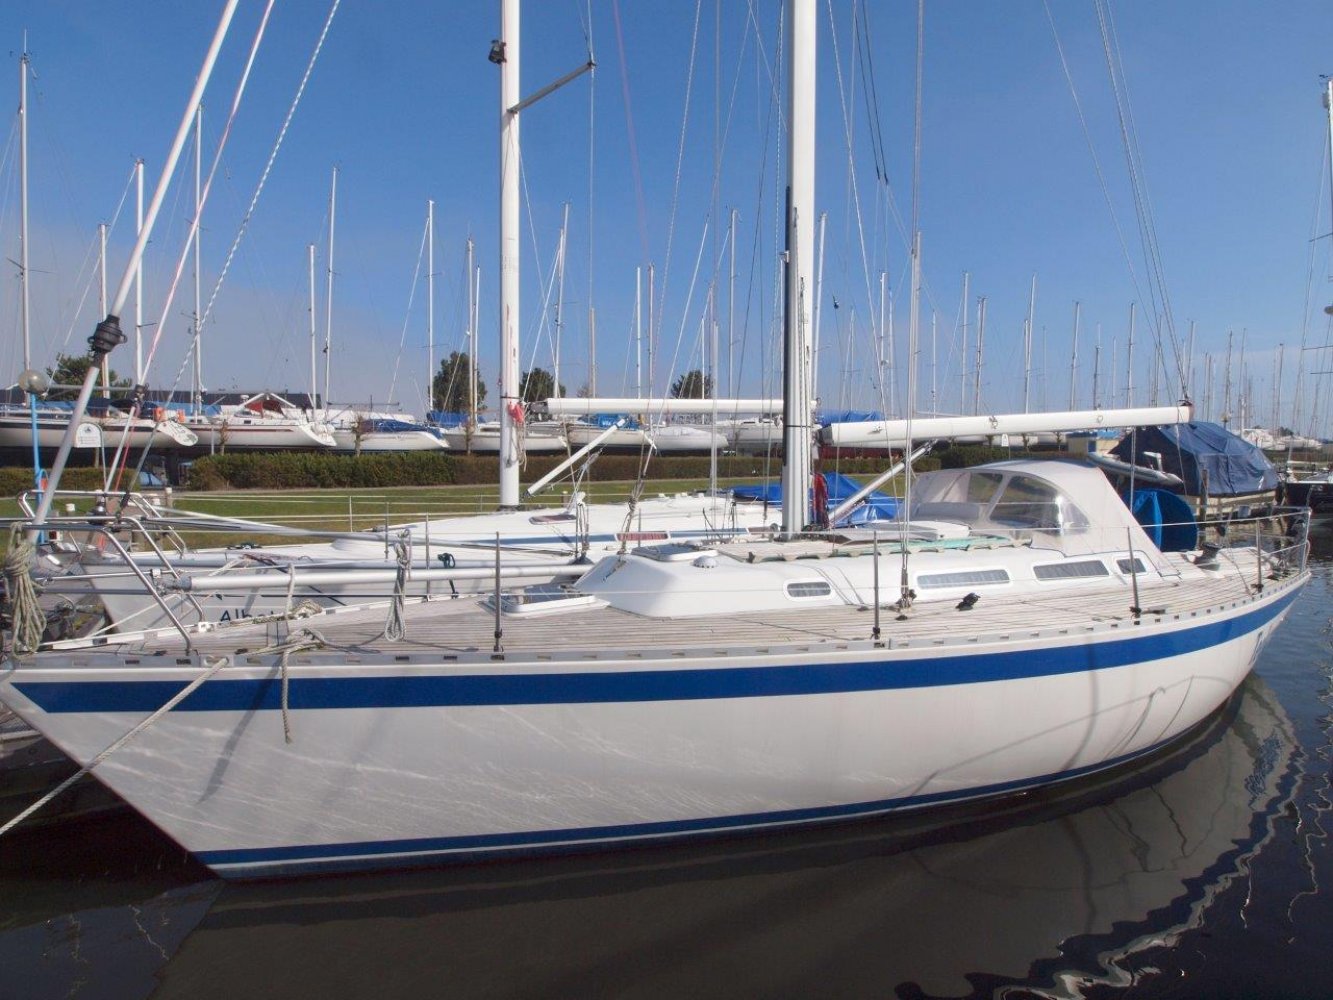 filosoof Volgen Betekenisvol Spirit 36 sailboat for sale | White Whale Yachtbrokers